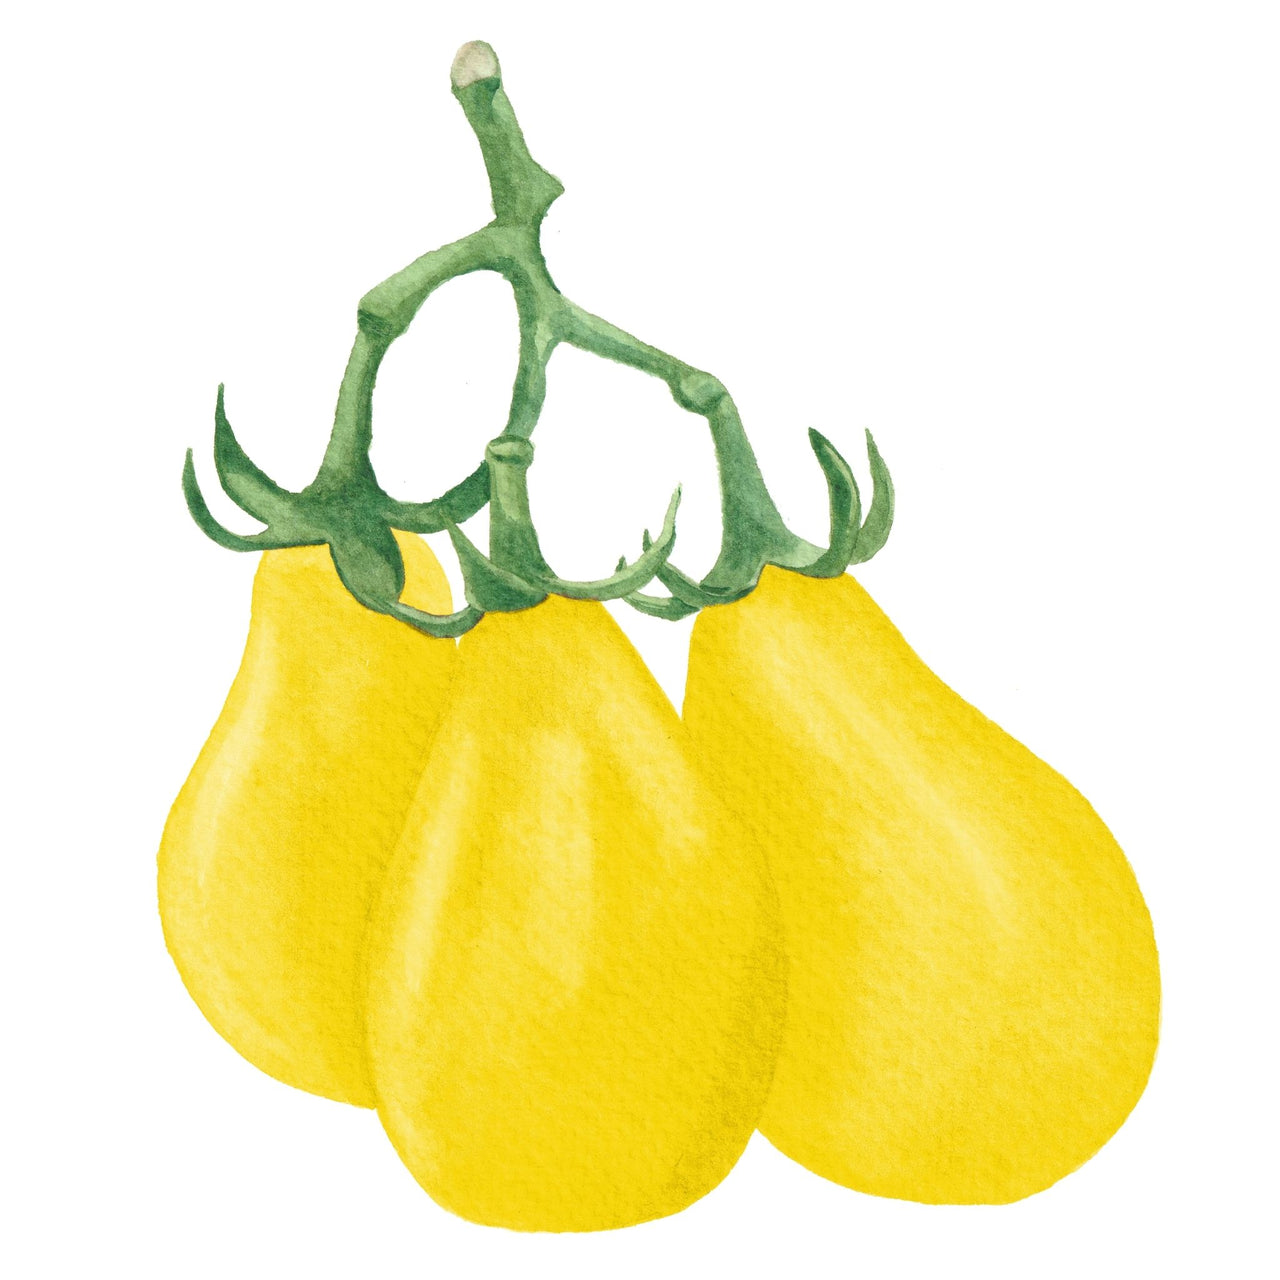 Tomato Seeds | Beam's Yellow Pear